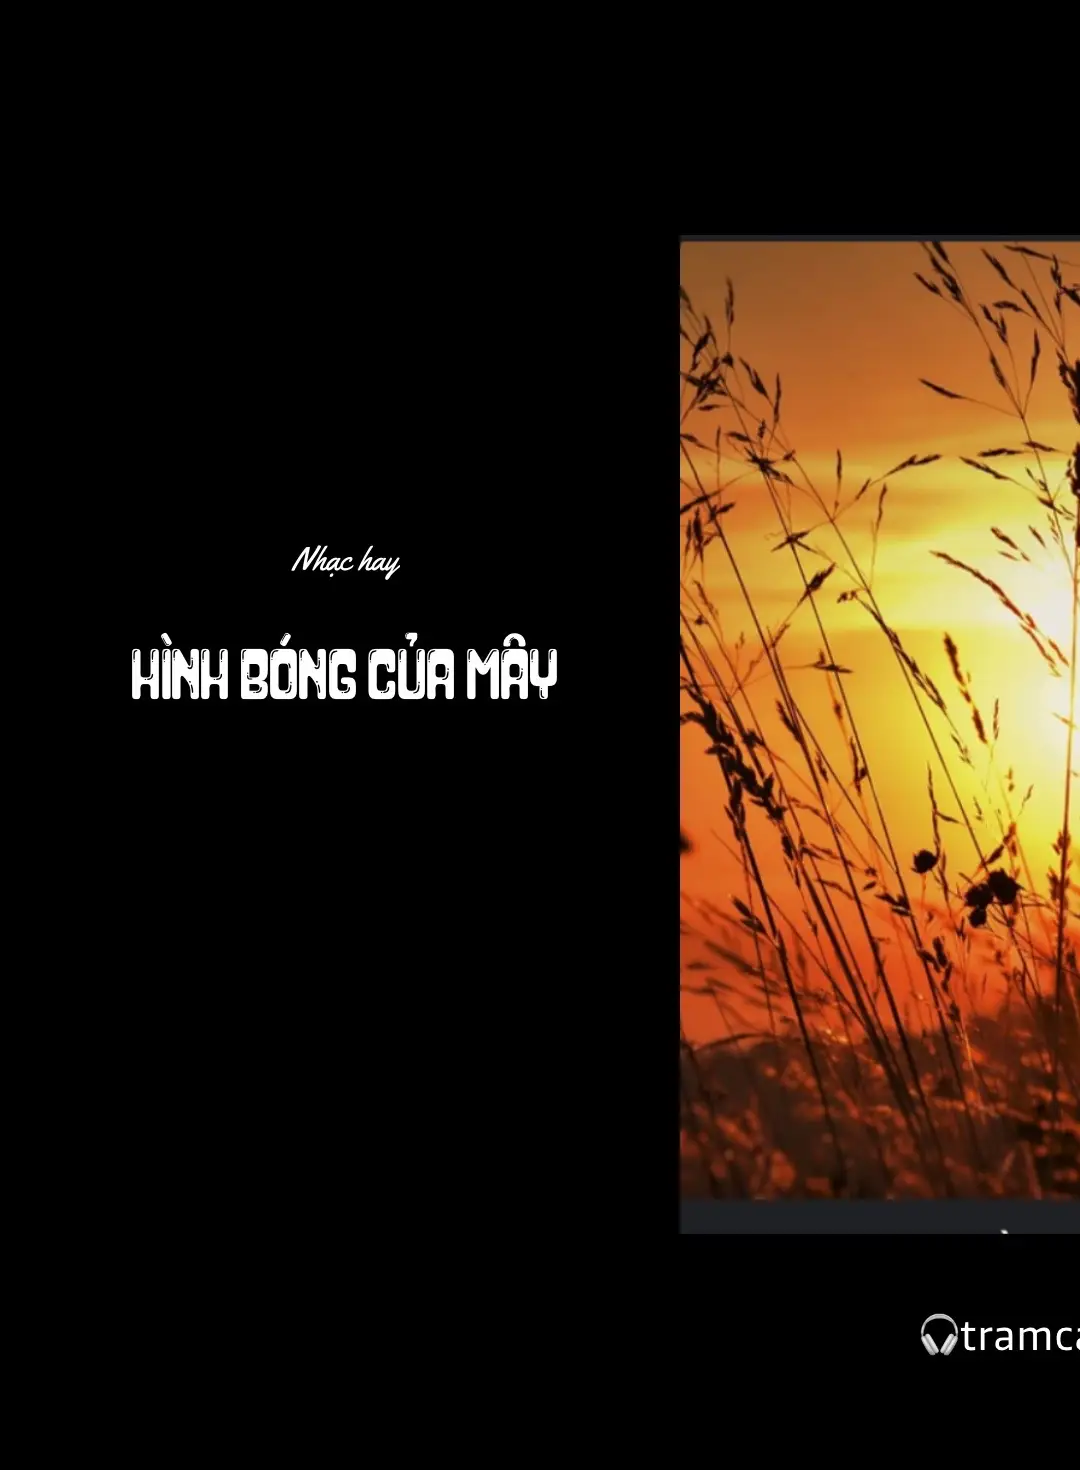 #khanhphuong #hinhbongcuamay #nhachaymoingay #nhạcbuồn #remix #cover #remix 